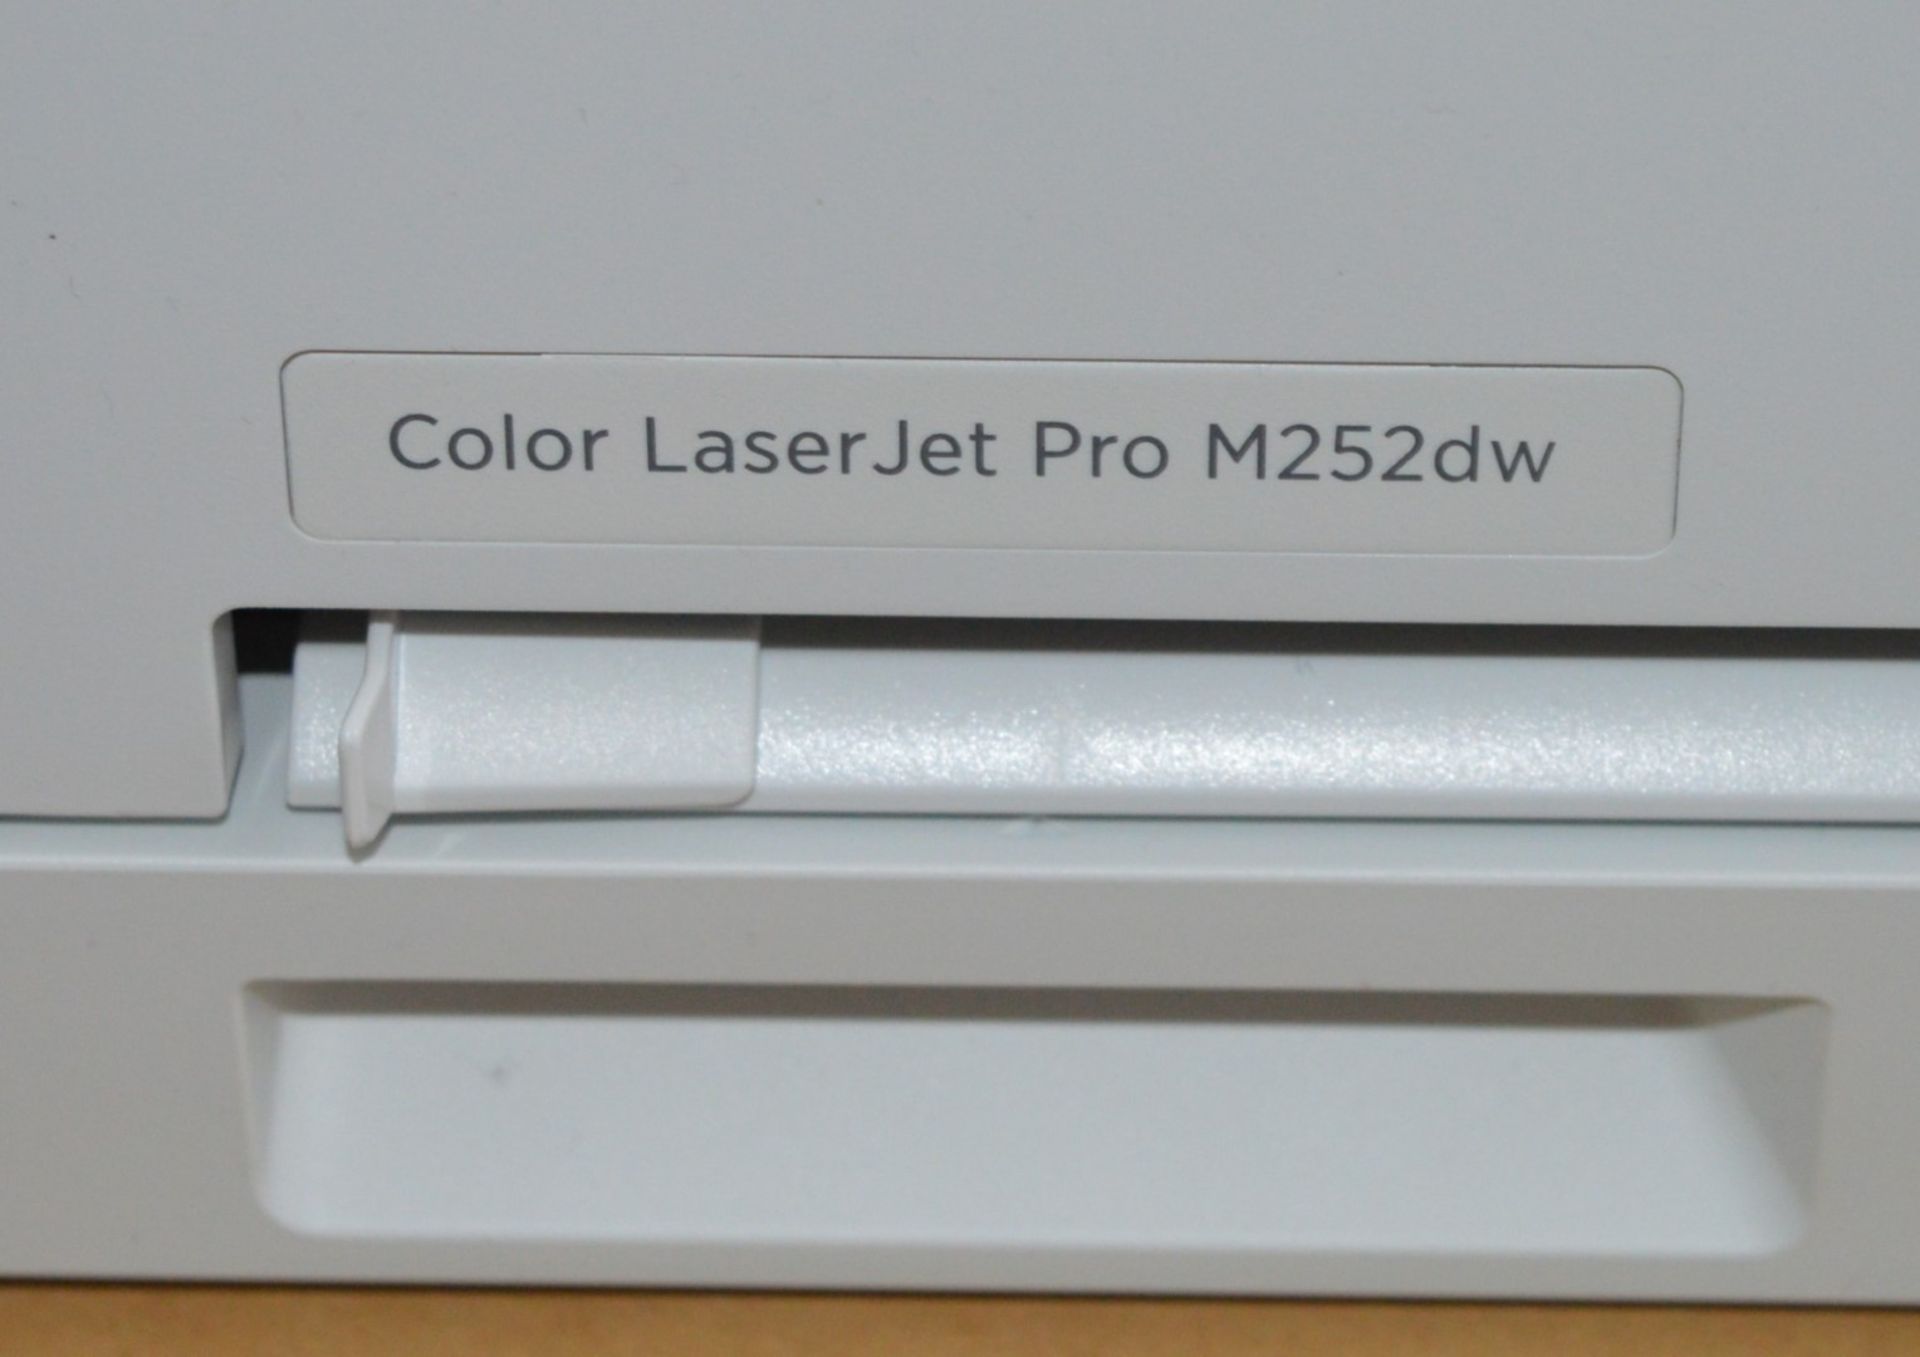 1 x HP LaserJet Pro M252dw Colour Laser Printer - CL010 - Ref IT467 - Includes Full Set of - Image 4 of 11